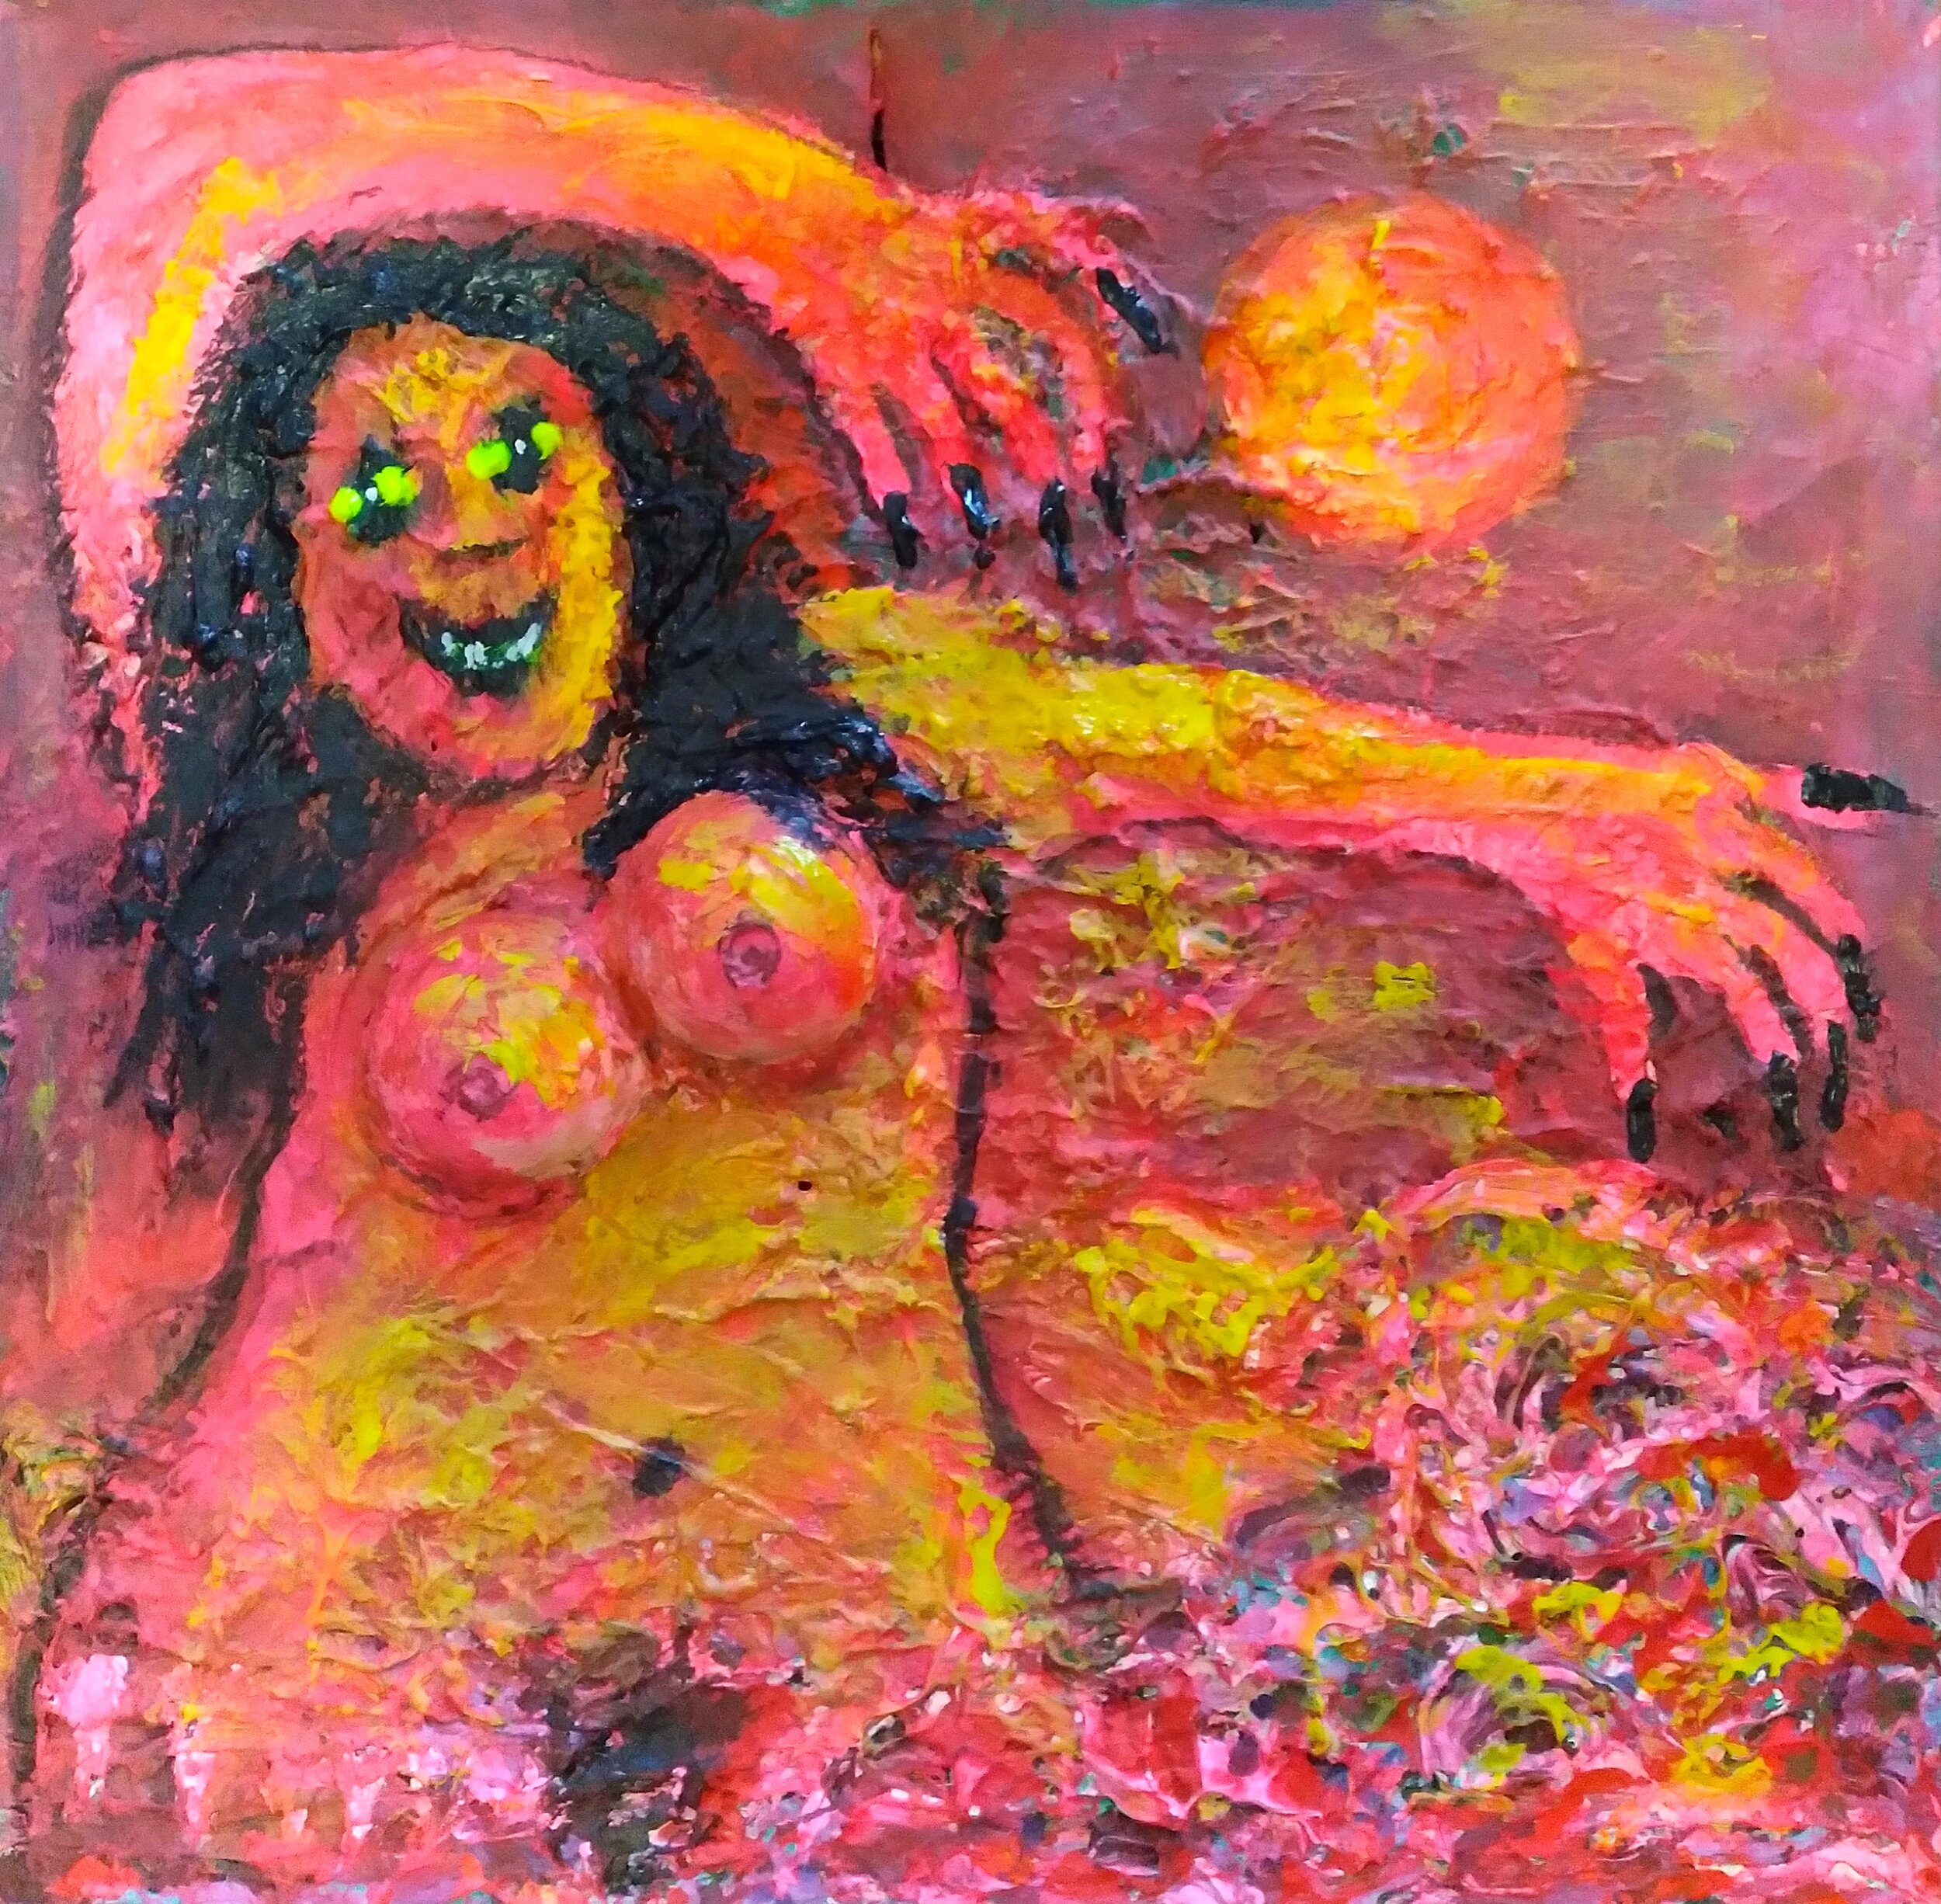 Pink Moon, 2017. Oil, acrylic, wood on canvas. 30" x 30".